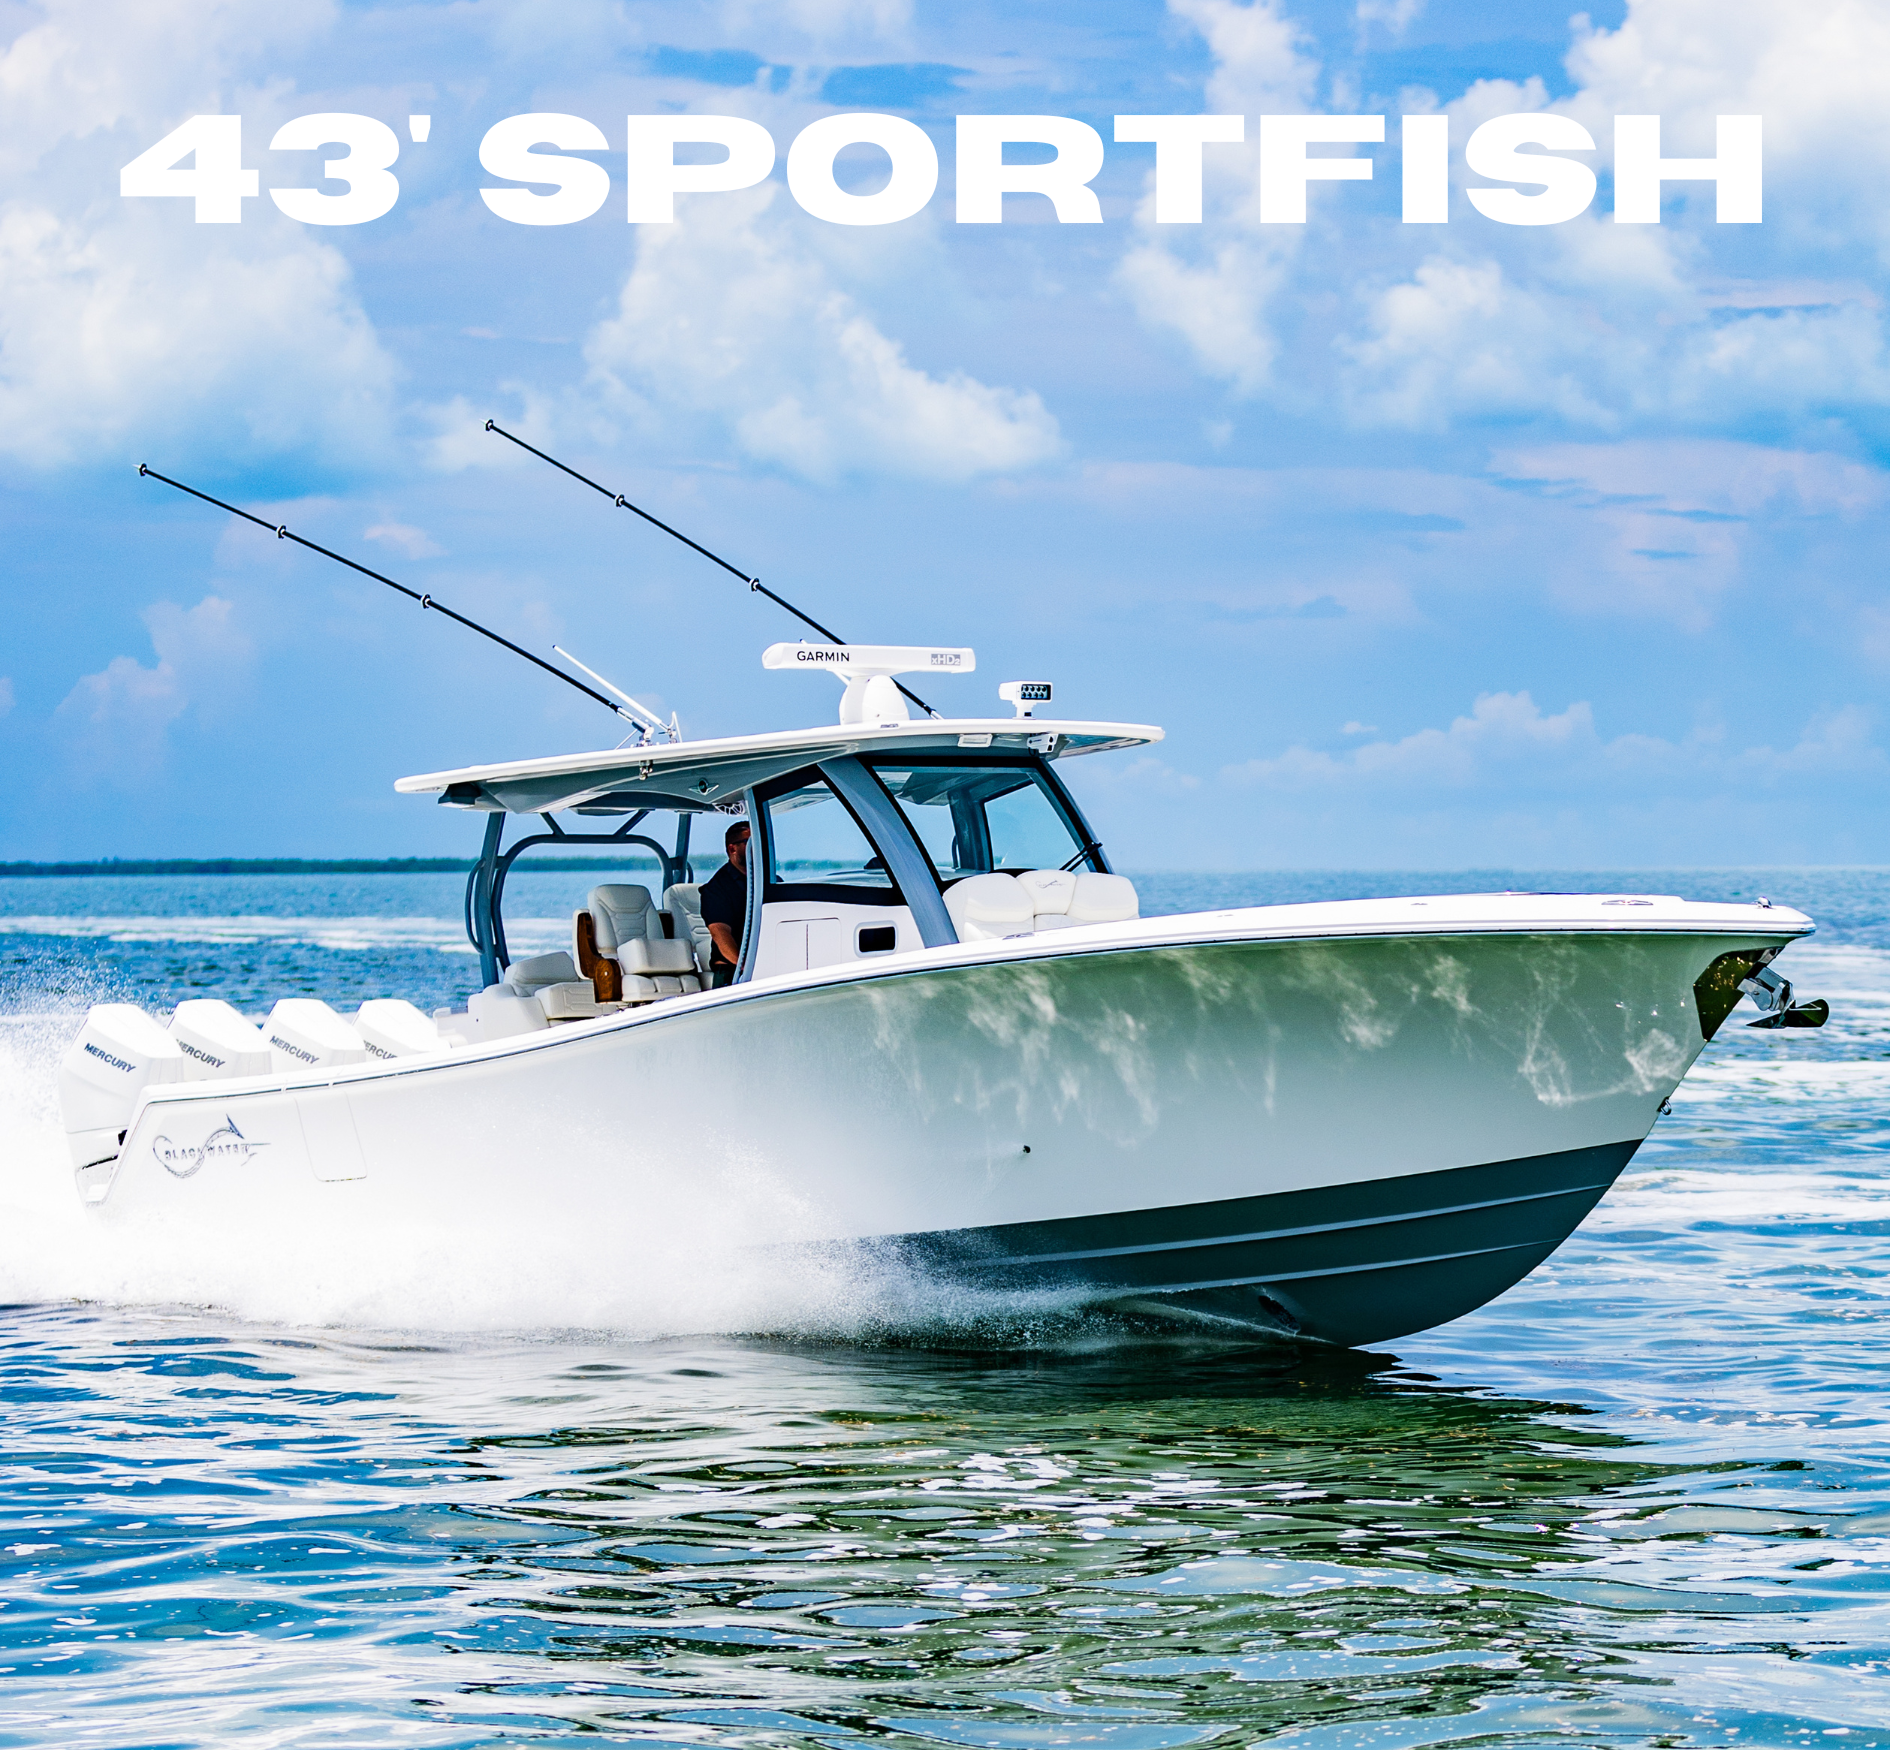 43' Sportfish